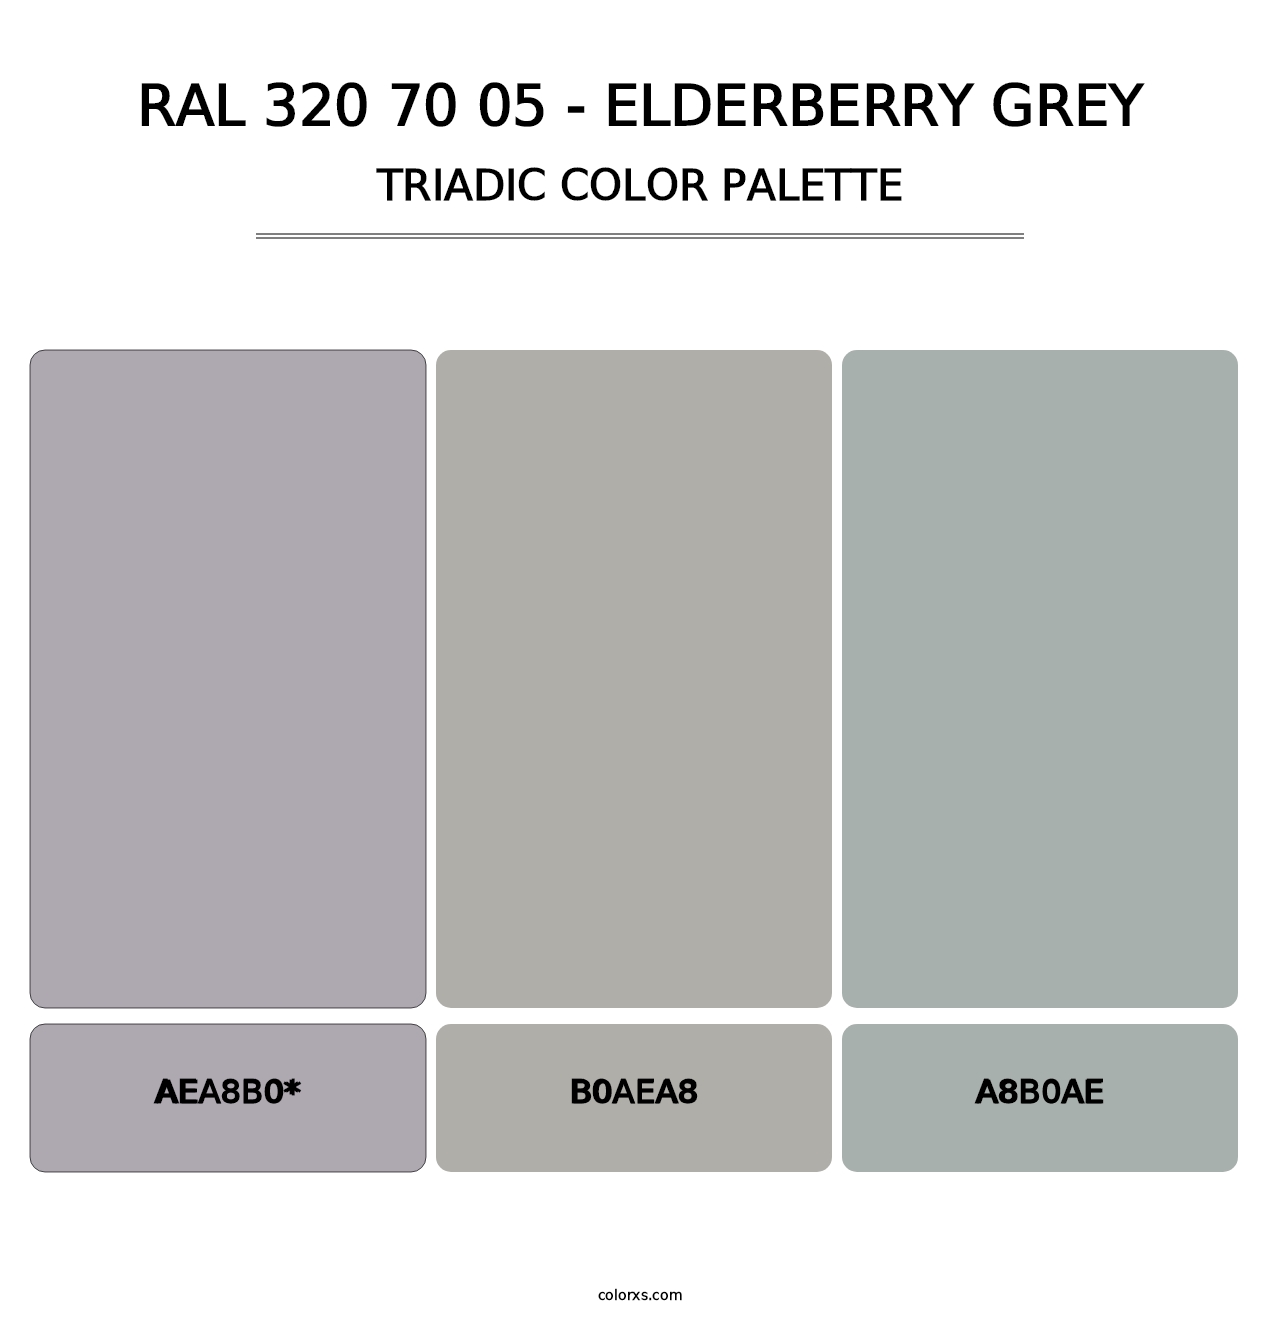 RAL 320 70 05 - Elderberry Grey - Triadic Color Palette